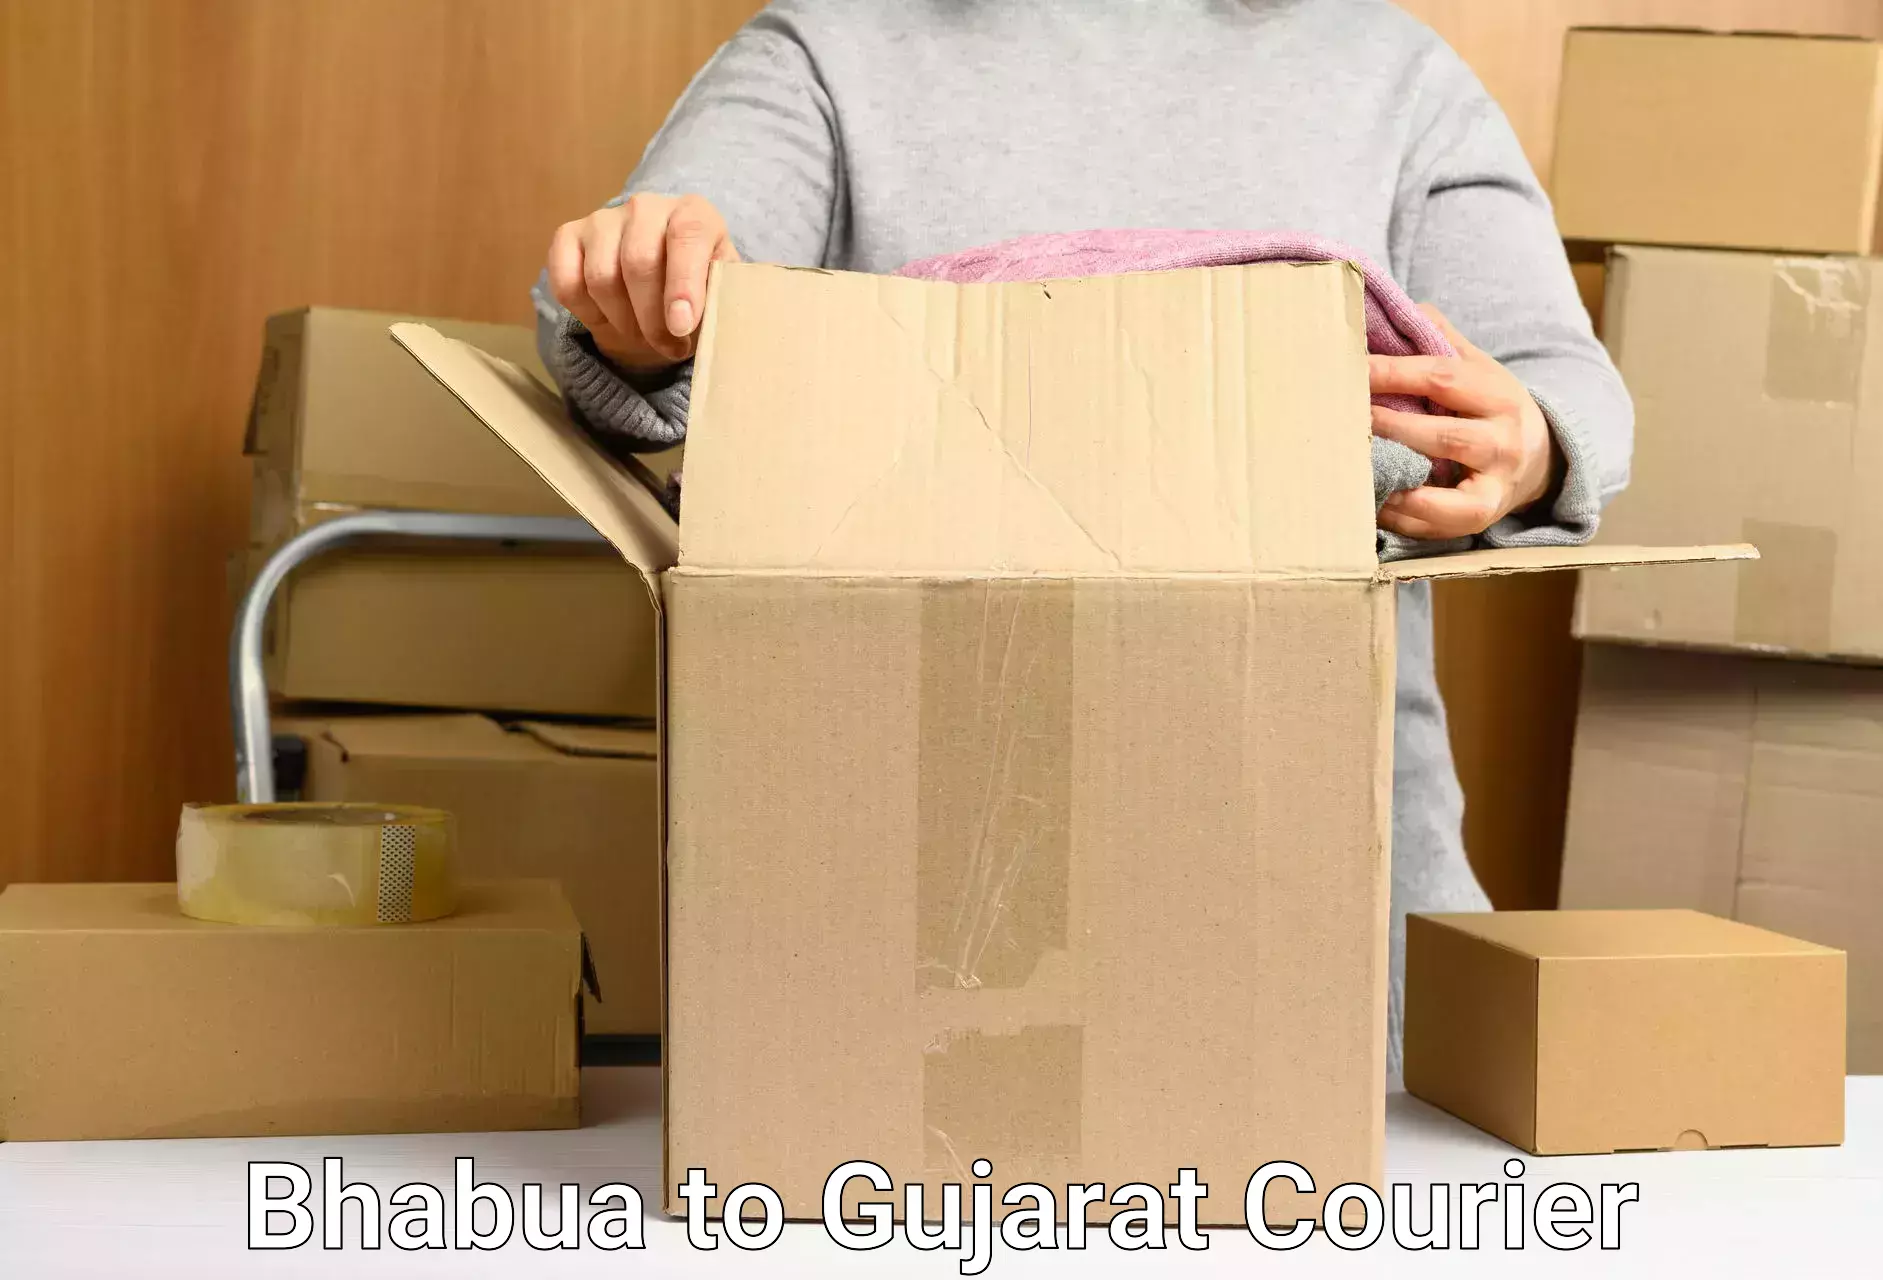 Efficient order fulfillment Bhabua to Gujarat